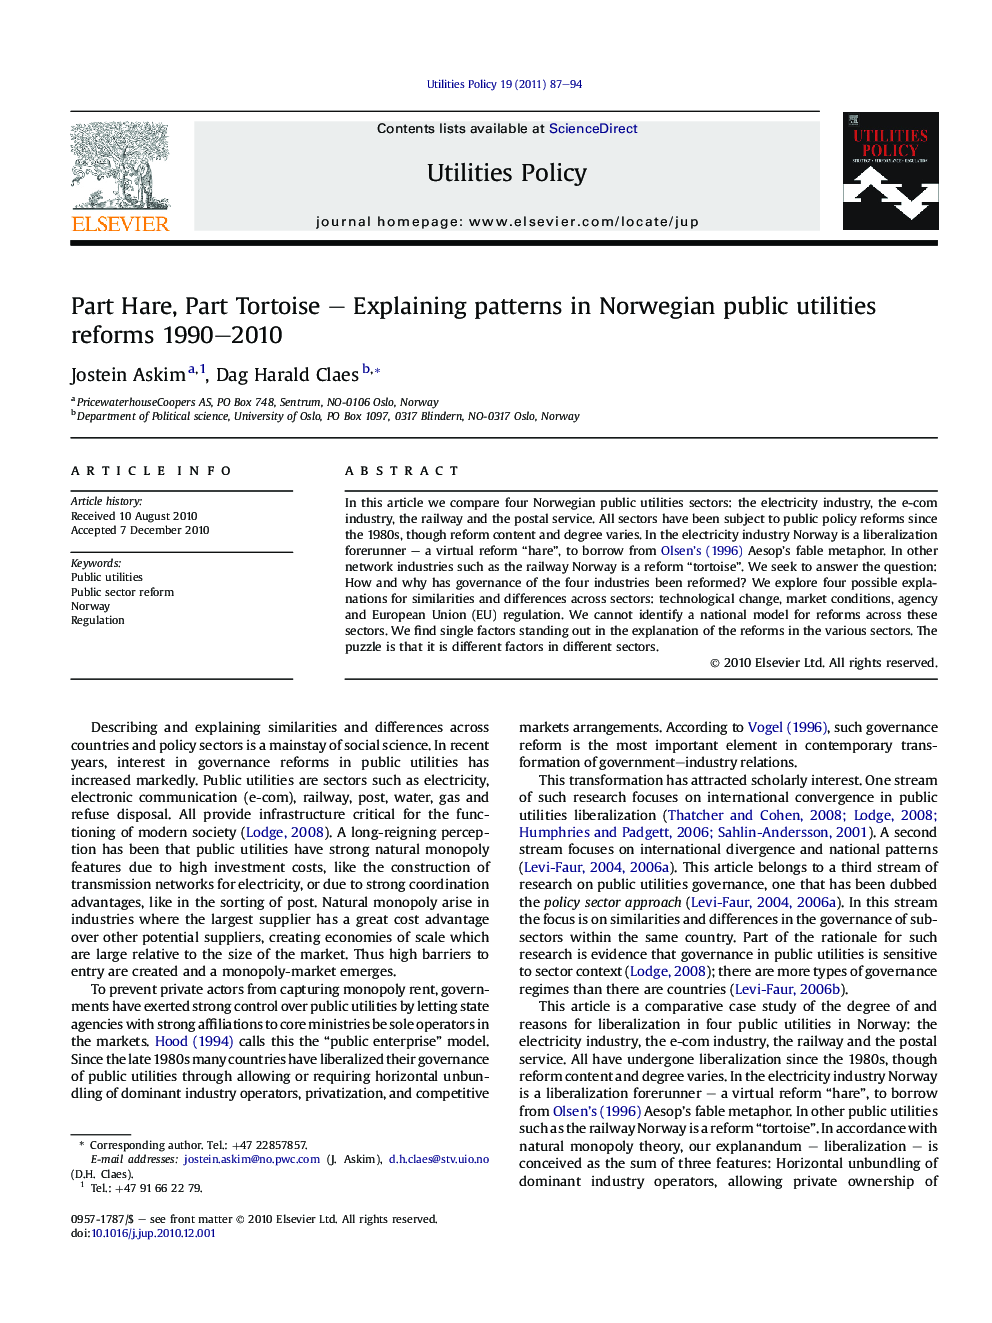 Part Hare, Part Tortoise – Explaining patterns in Norwegian public utilities reforms 1990–2010